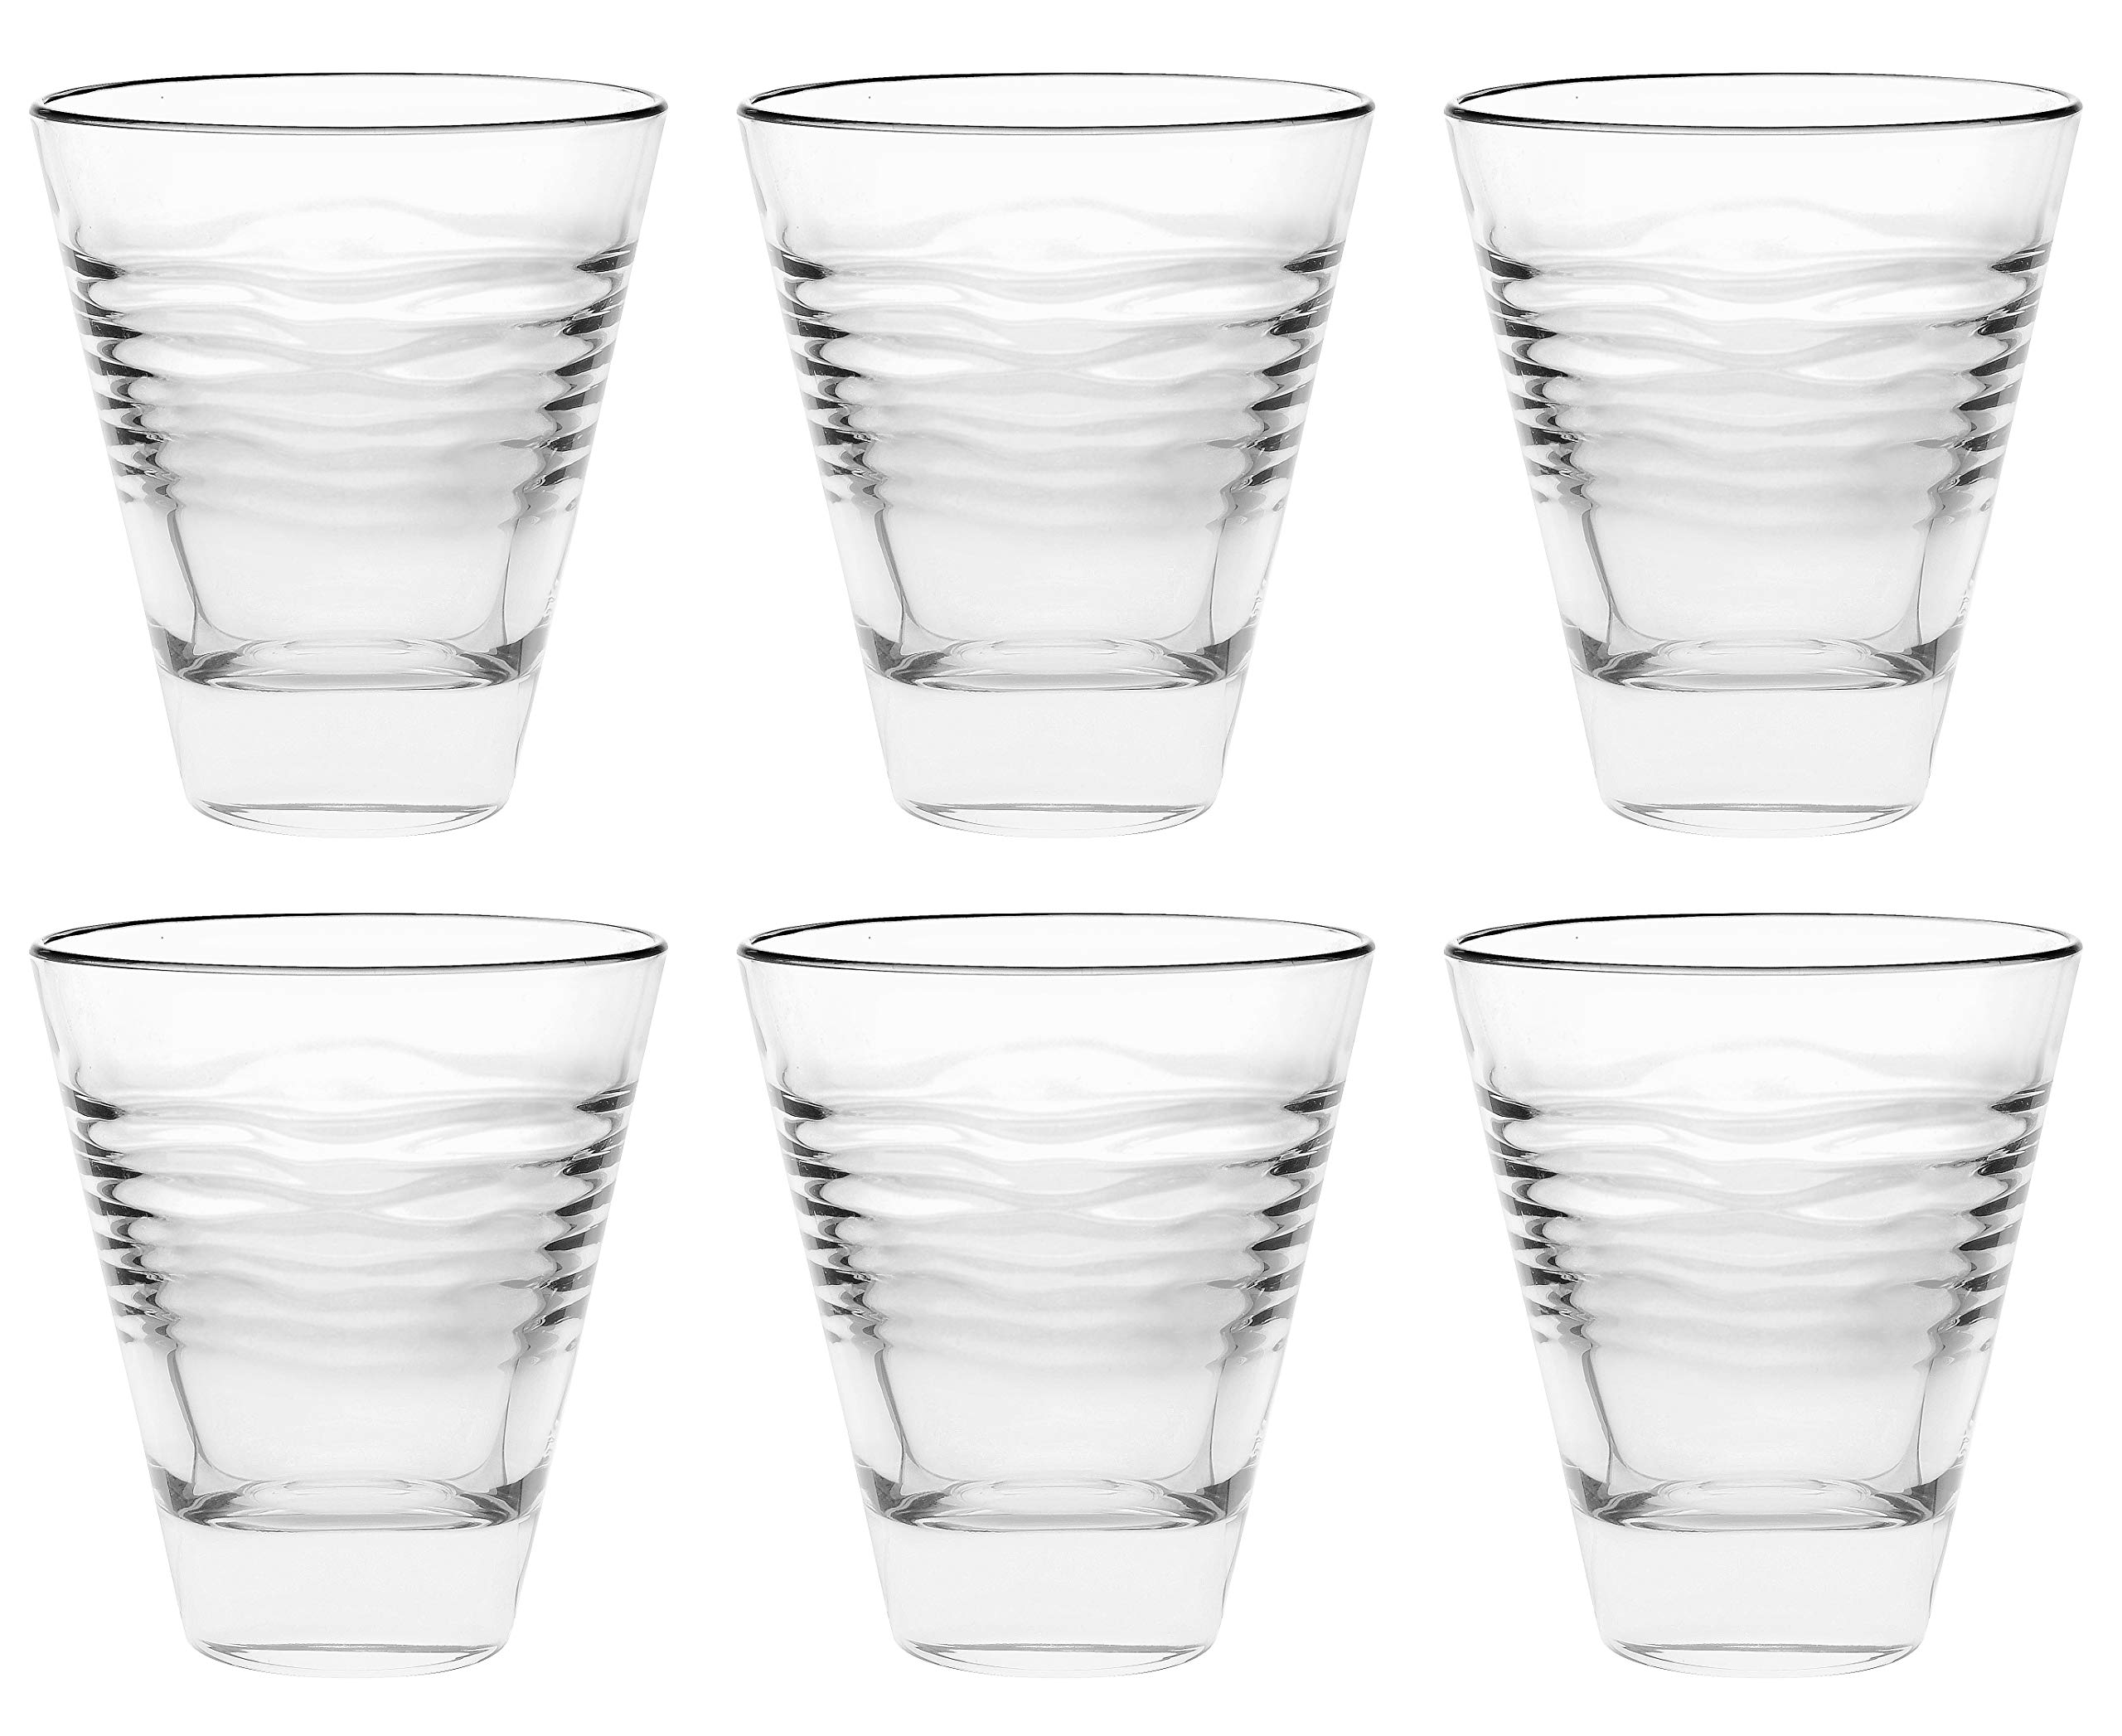 Barski - European Glass - Double Old Fashioned Tumbler Glasses - Uniquely Designed - Set of 6-10 oz. - Made in Europe